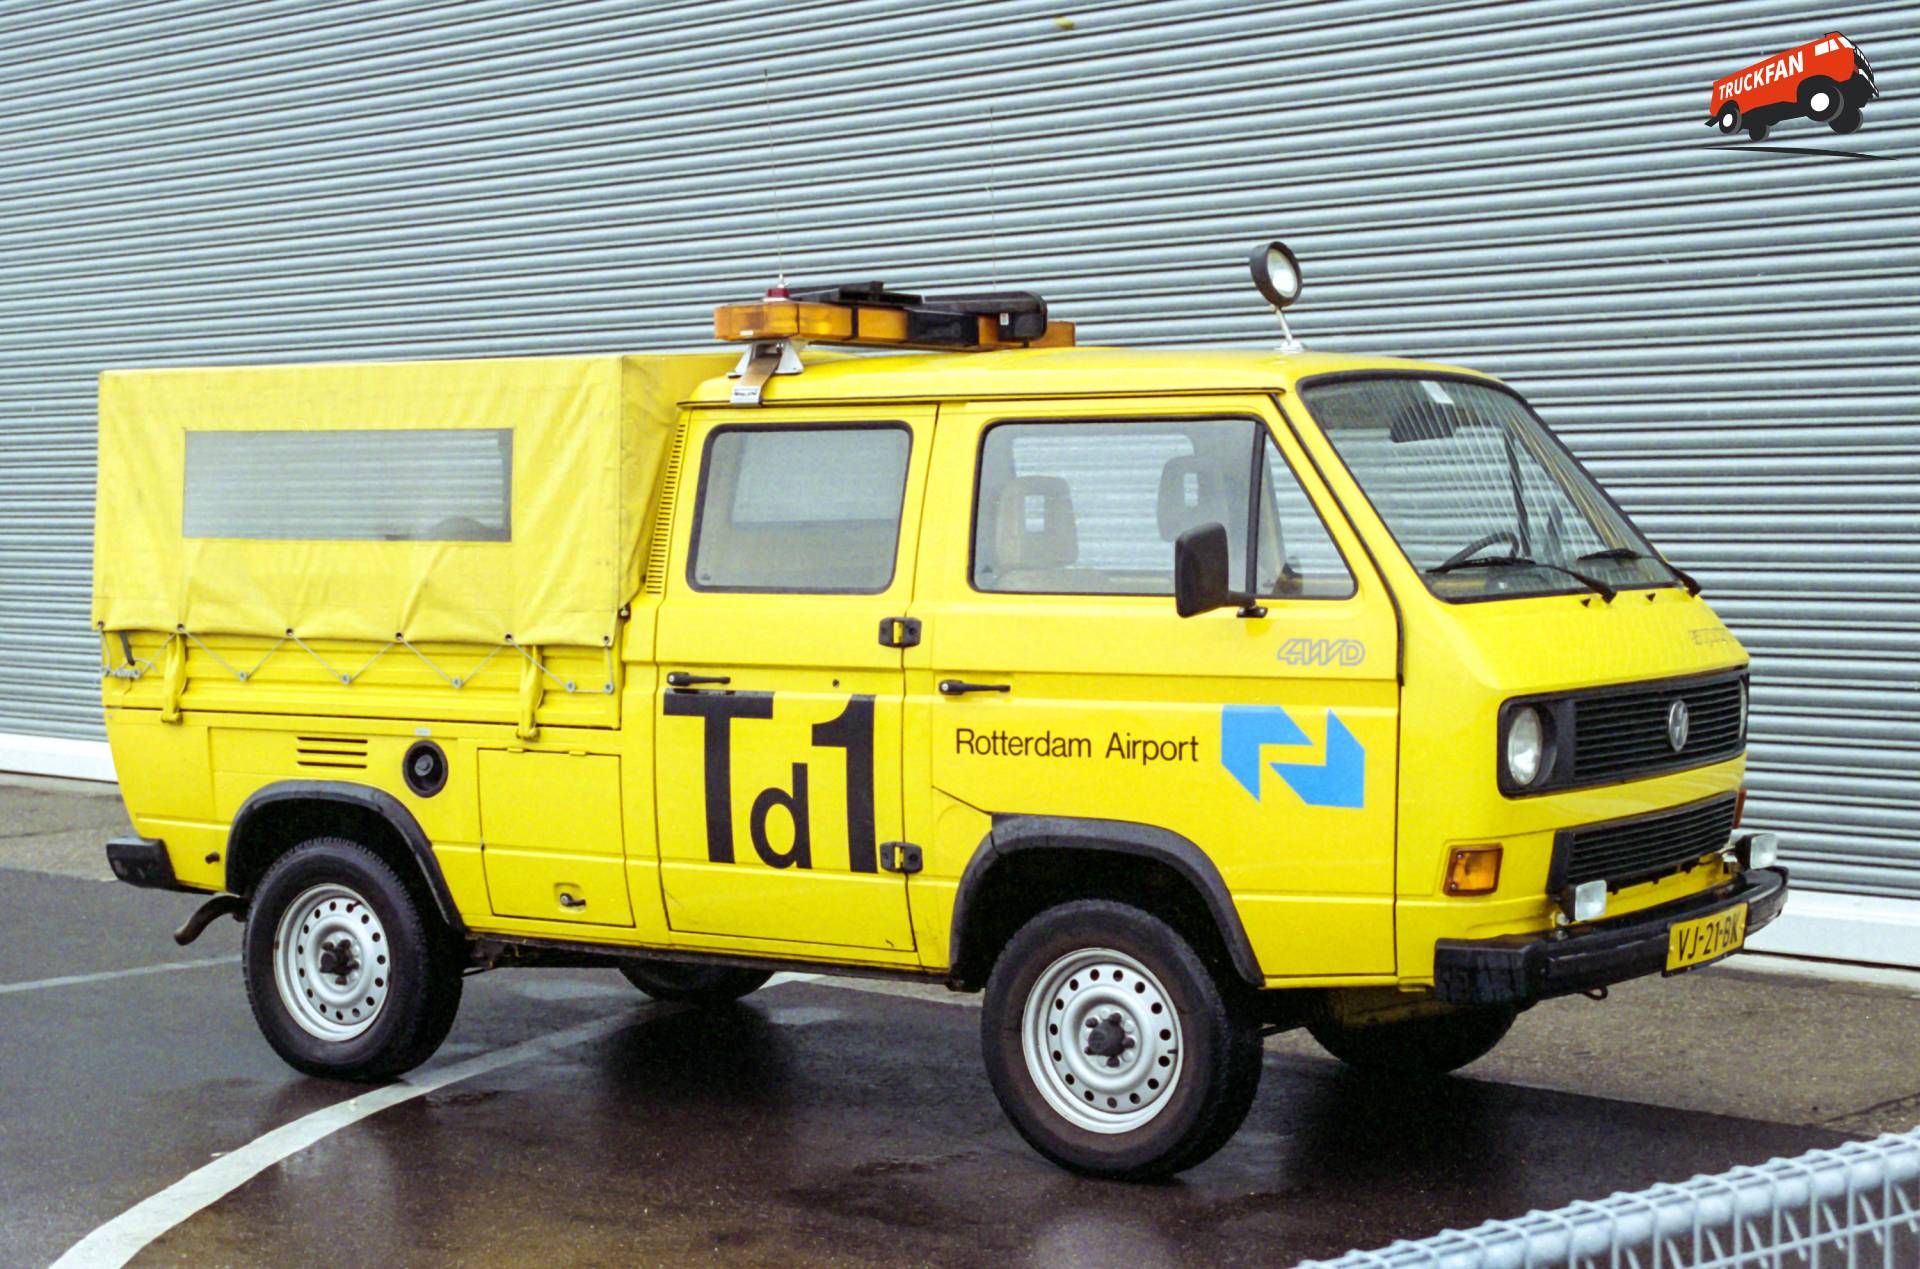 VW Transporter T3